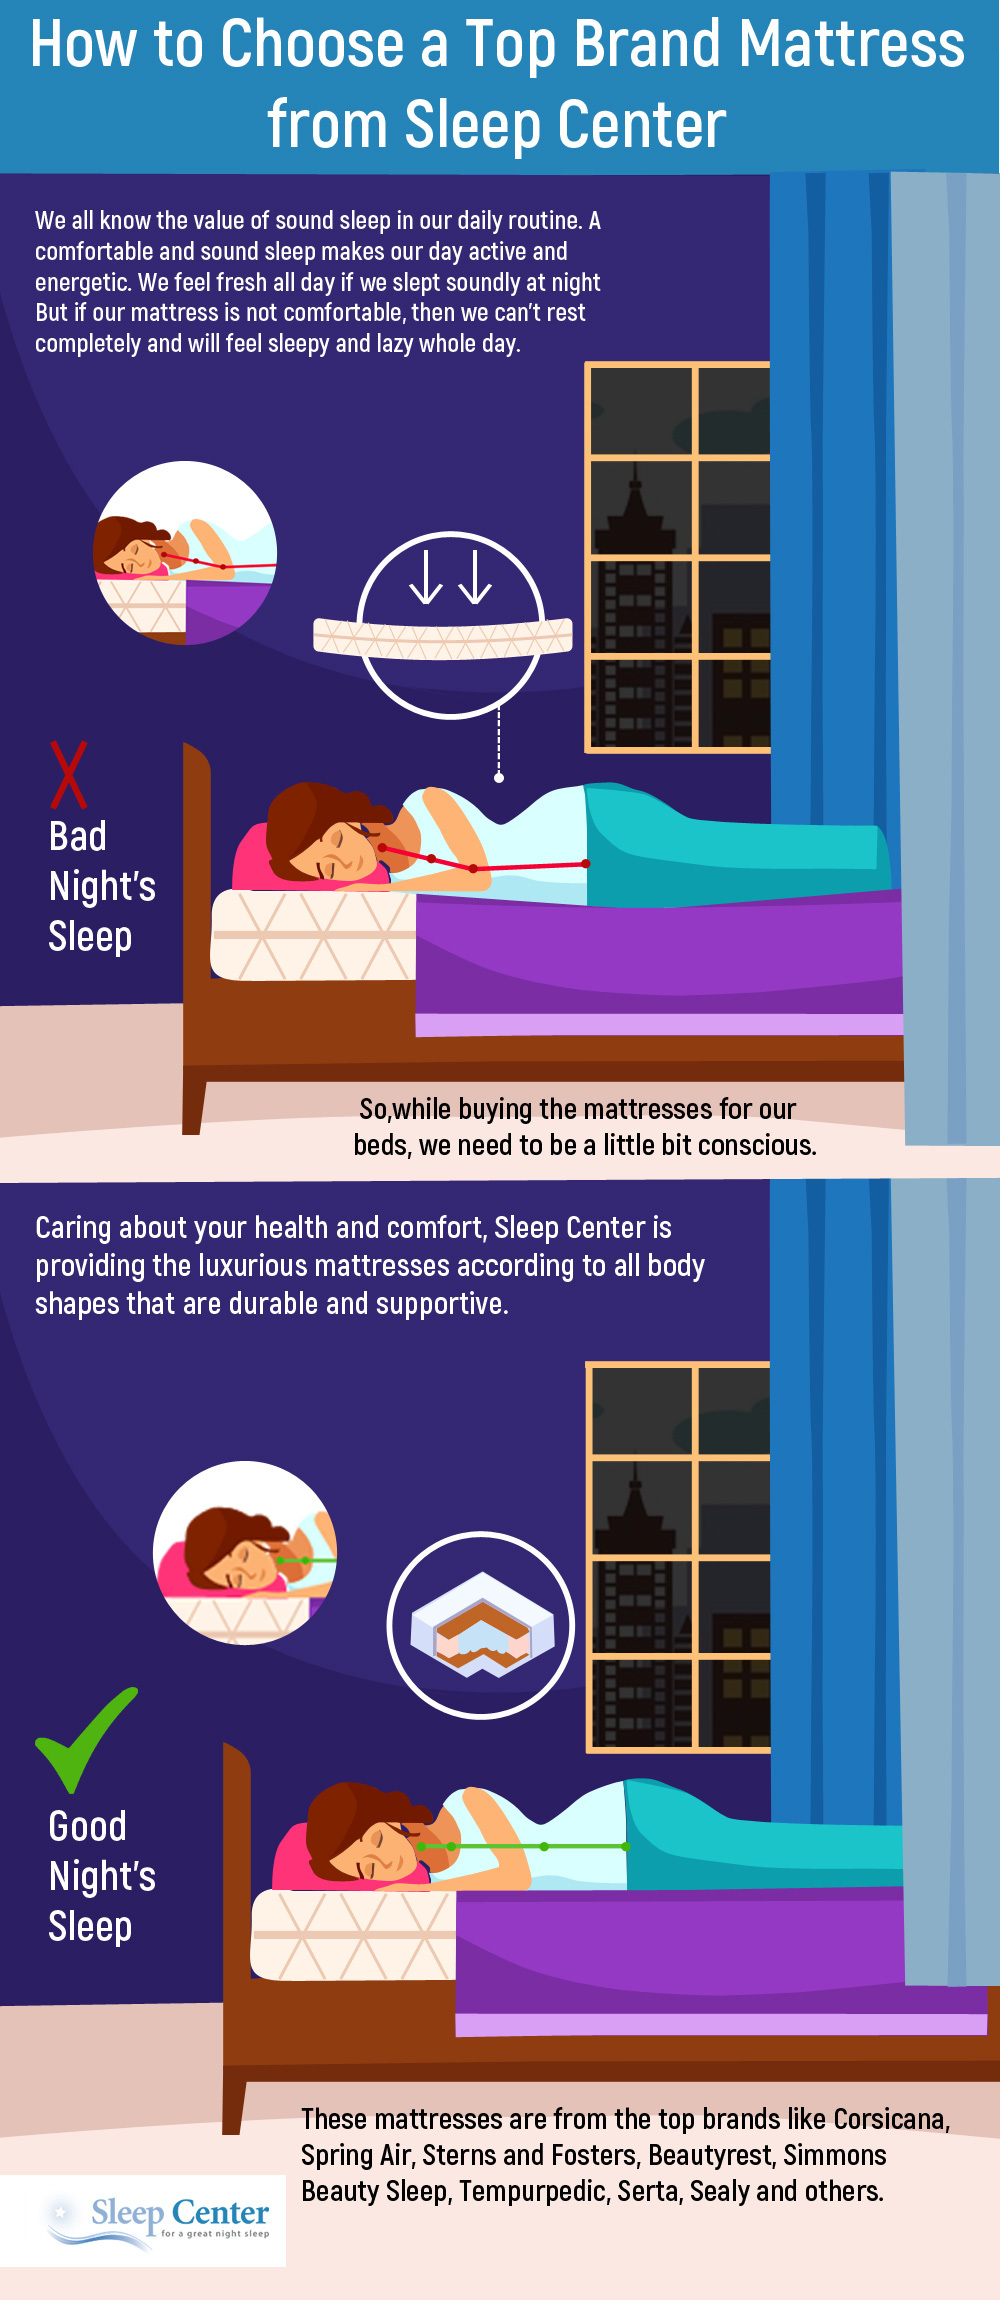 How to Choose a Top Brand Mattress from Sleep Center